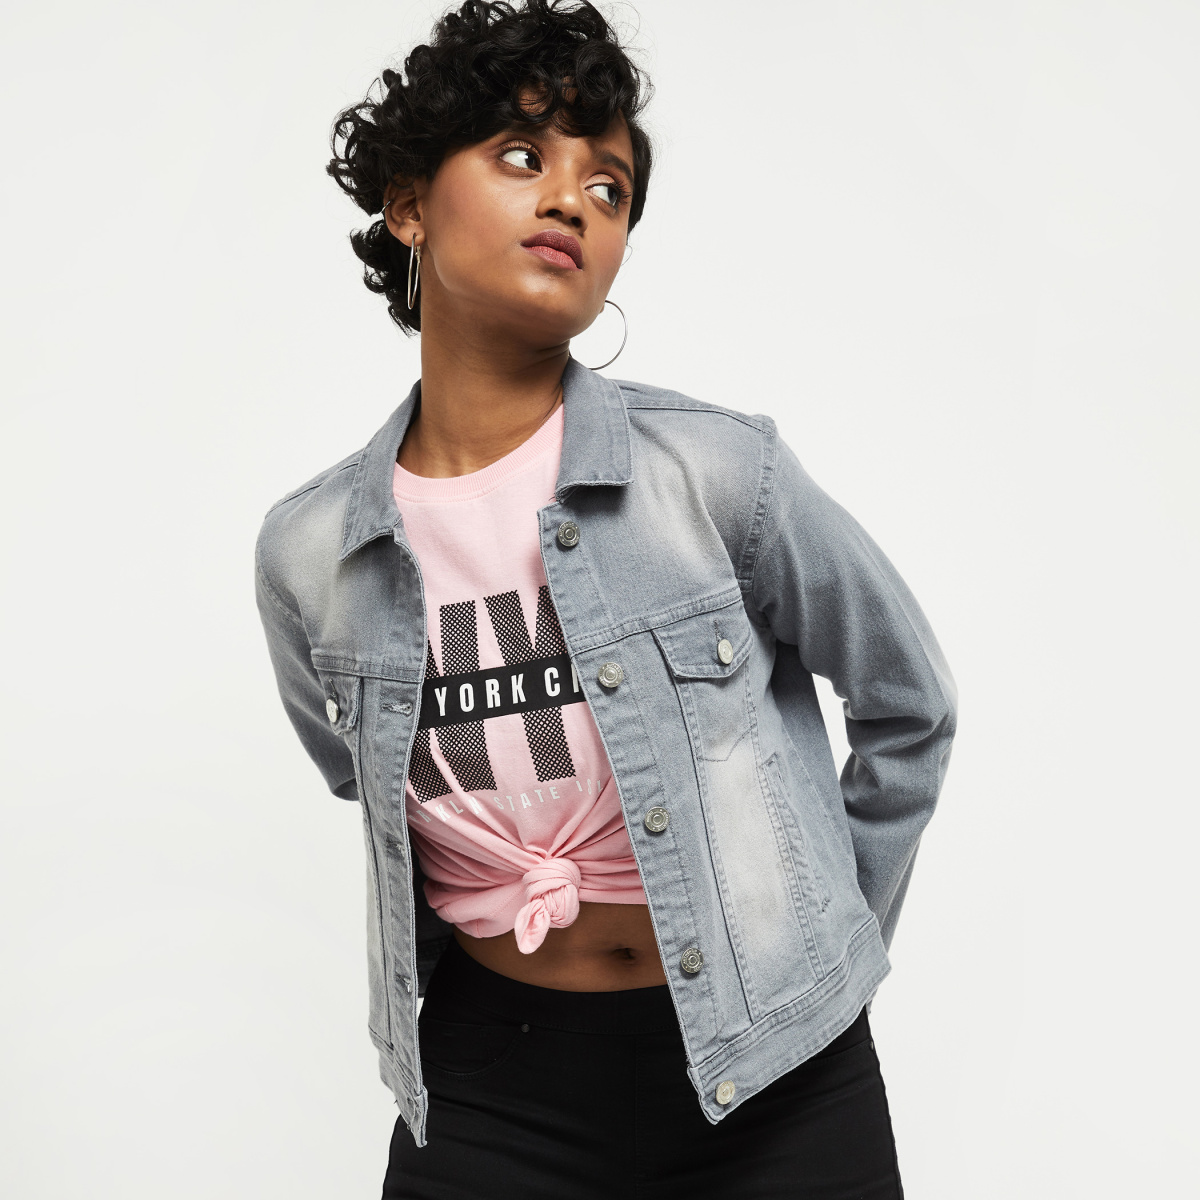 Women's Denim Jackets | Shop our trendy styles | NOISY MAY®